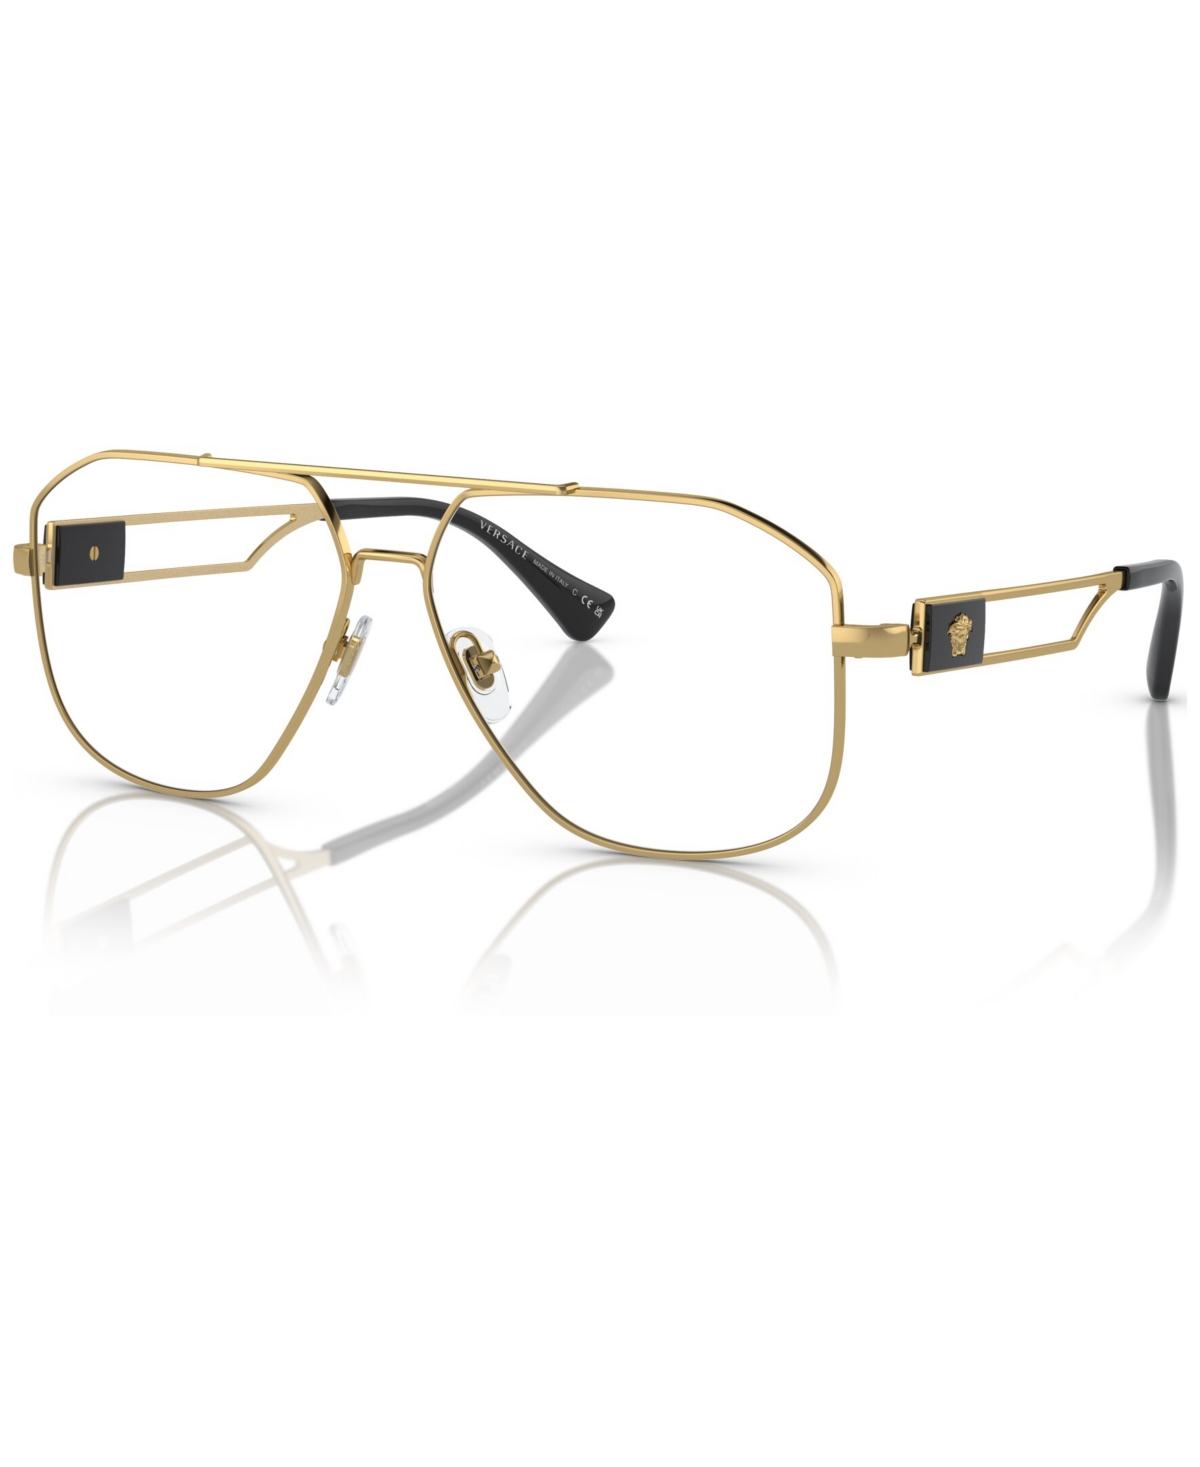 Men's Pilot Eyeglasses, VE1287 59 - Black, Gold-Tone